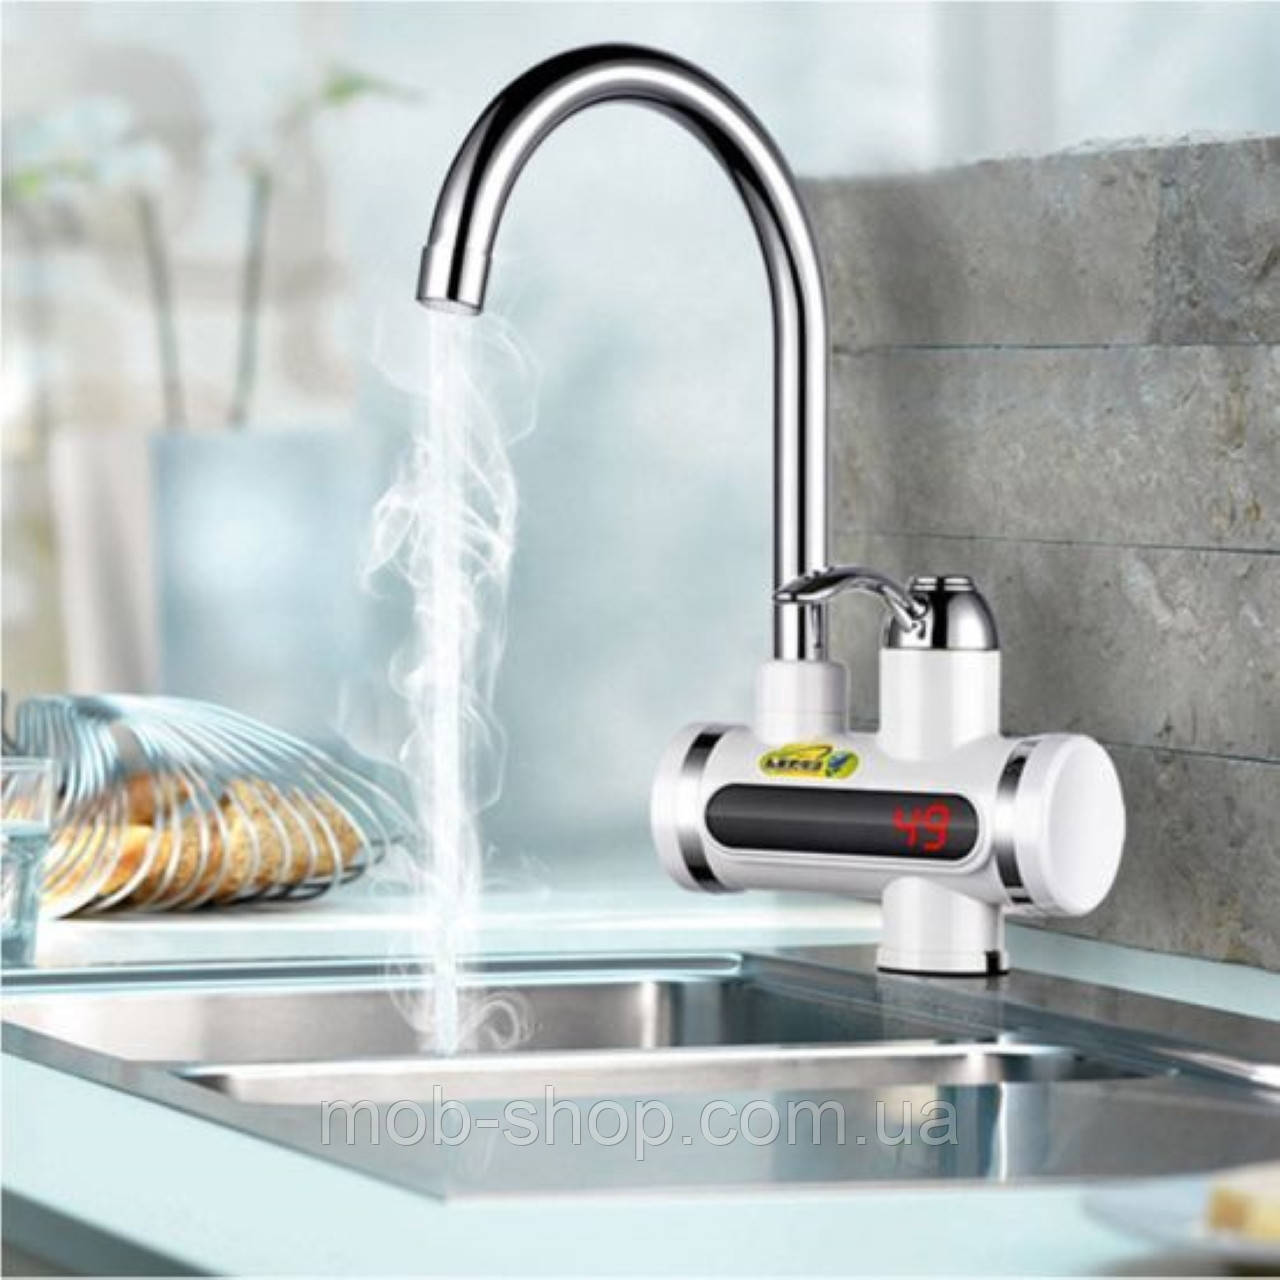 Проточний водонагрівач із LCD екраном Instant Electric Heating Water Faucet бойлер кран для кухні